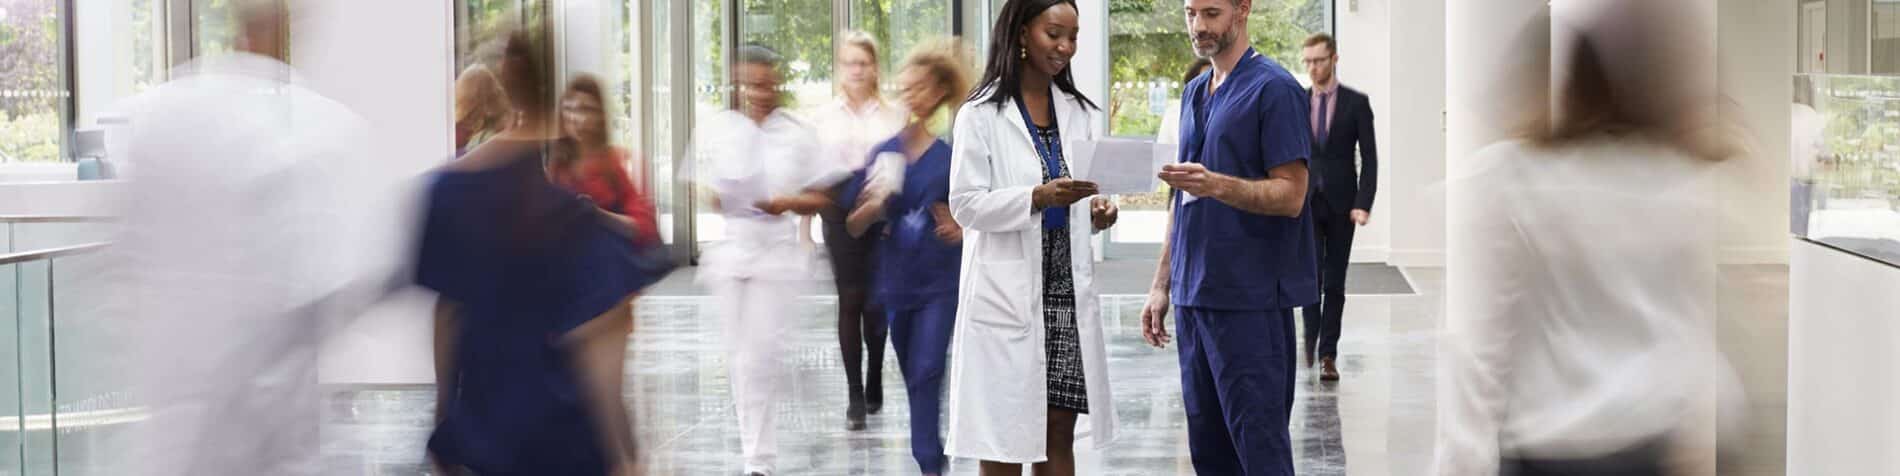 SAP.iO Foundries: Healthcare Startups Transform Pandemic Response